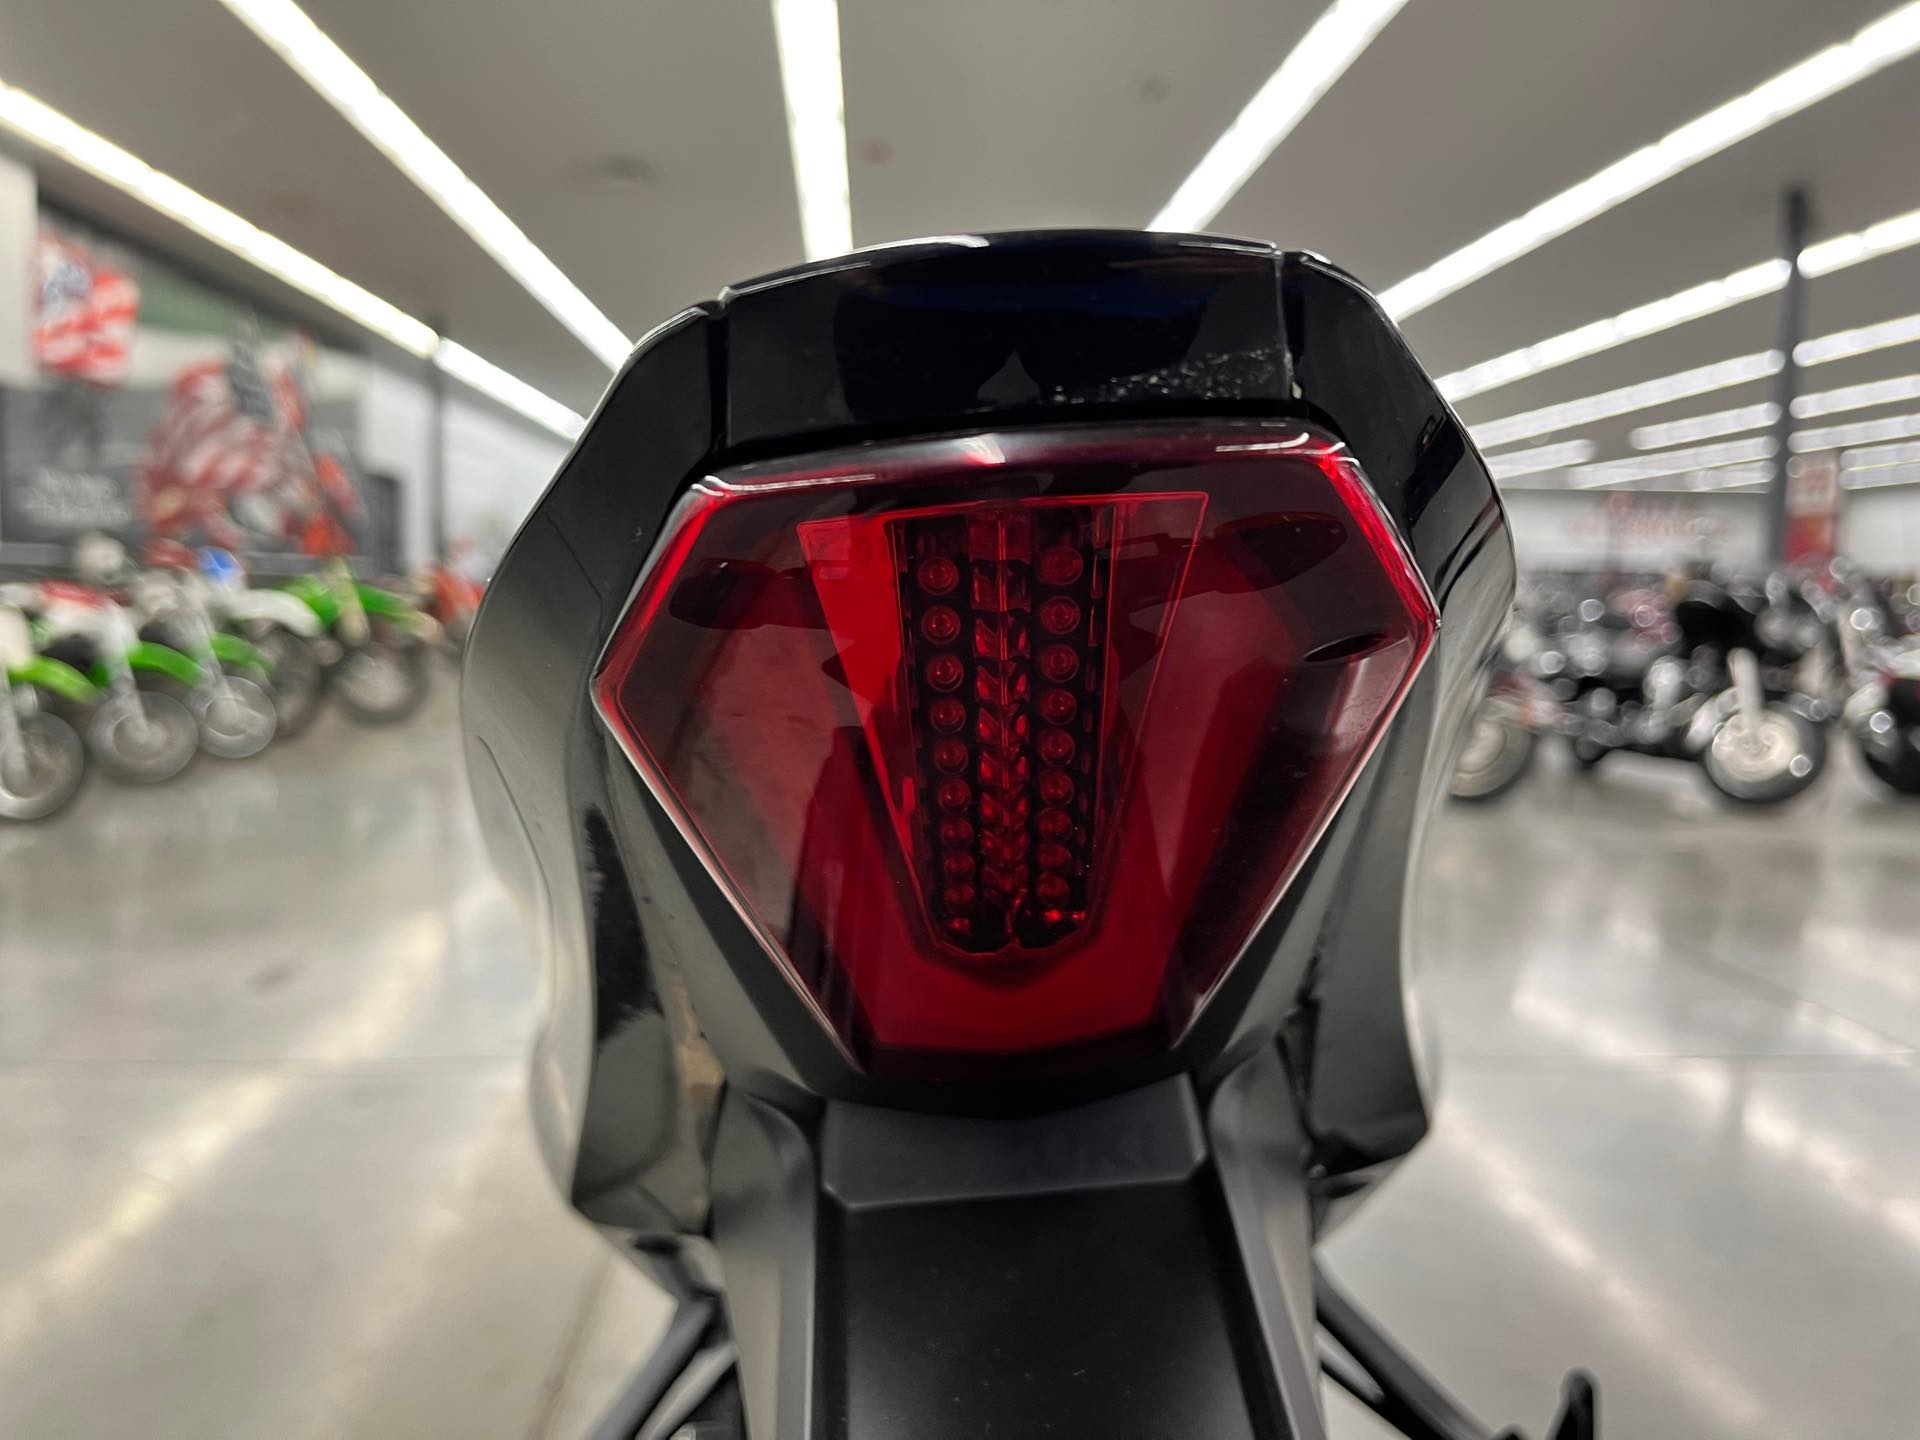 2018 Suzuki GSX-R 1000R at Aces Motorcycles - Denver